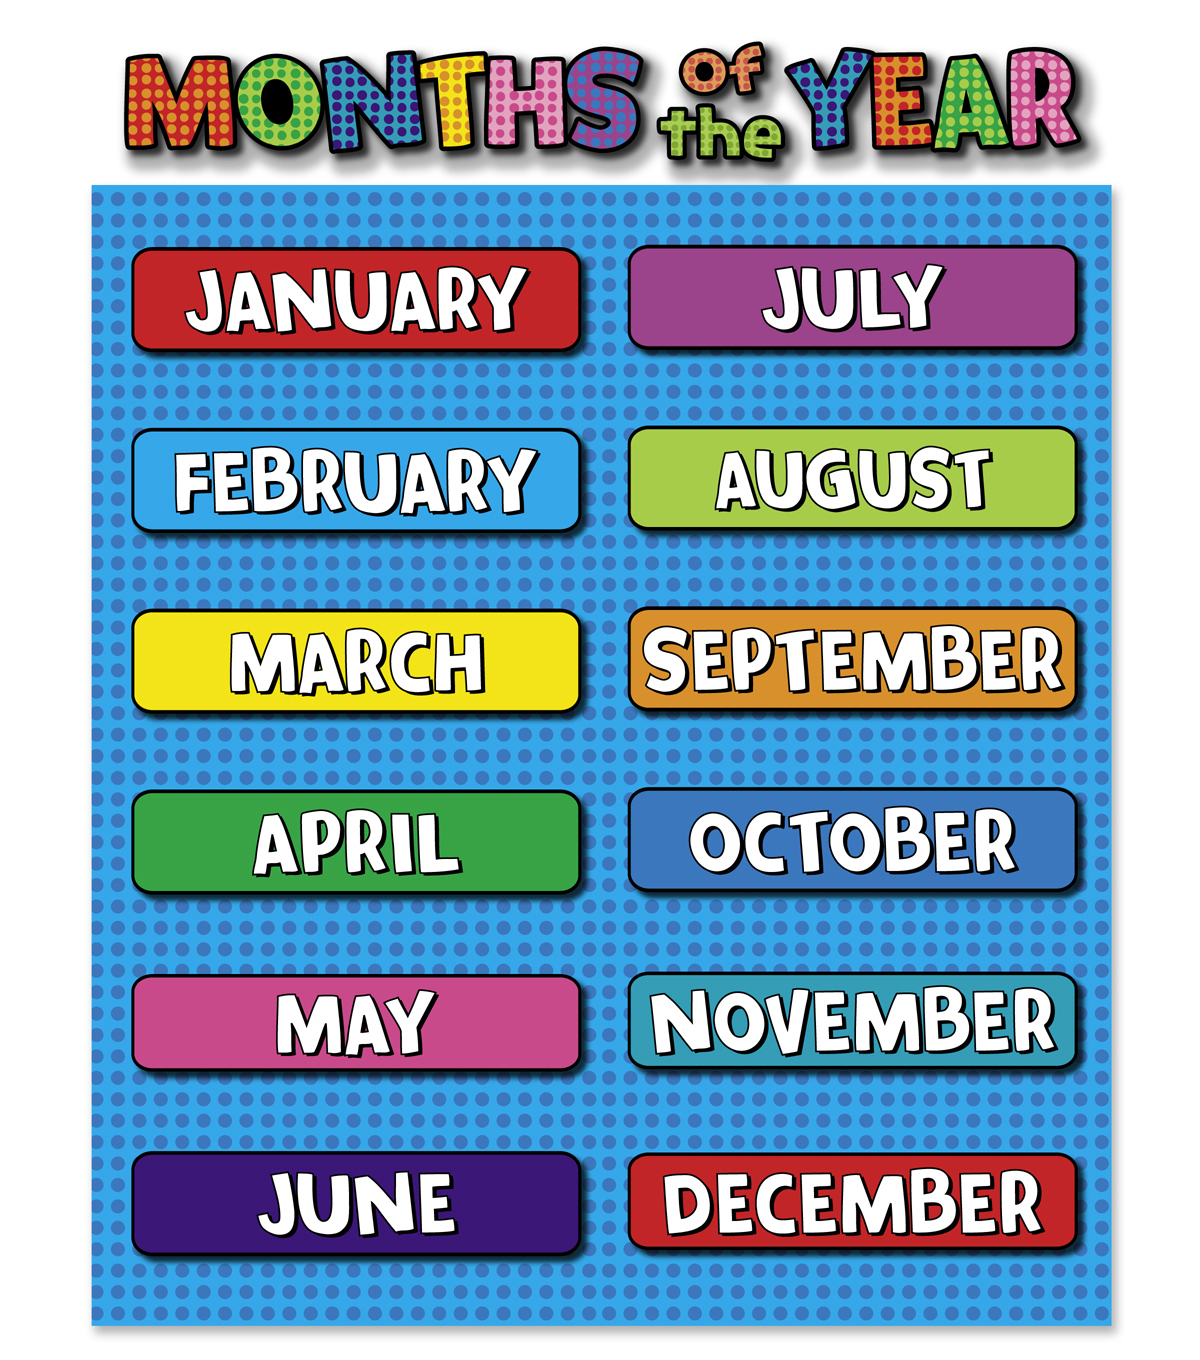 Месяца на английском видео. Months of the year. Month для детей. Месяца на английском. Месяцы для детей по английскому.